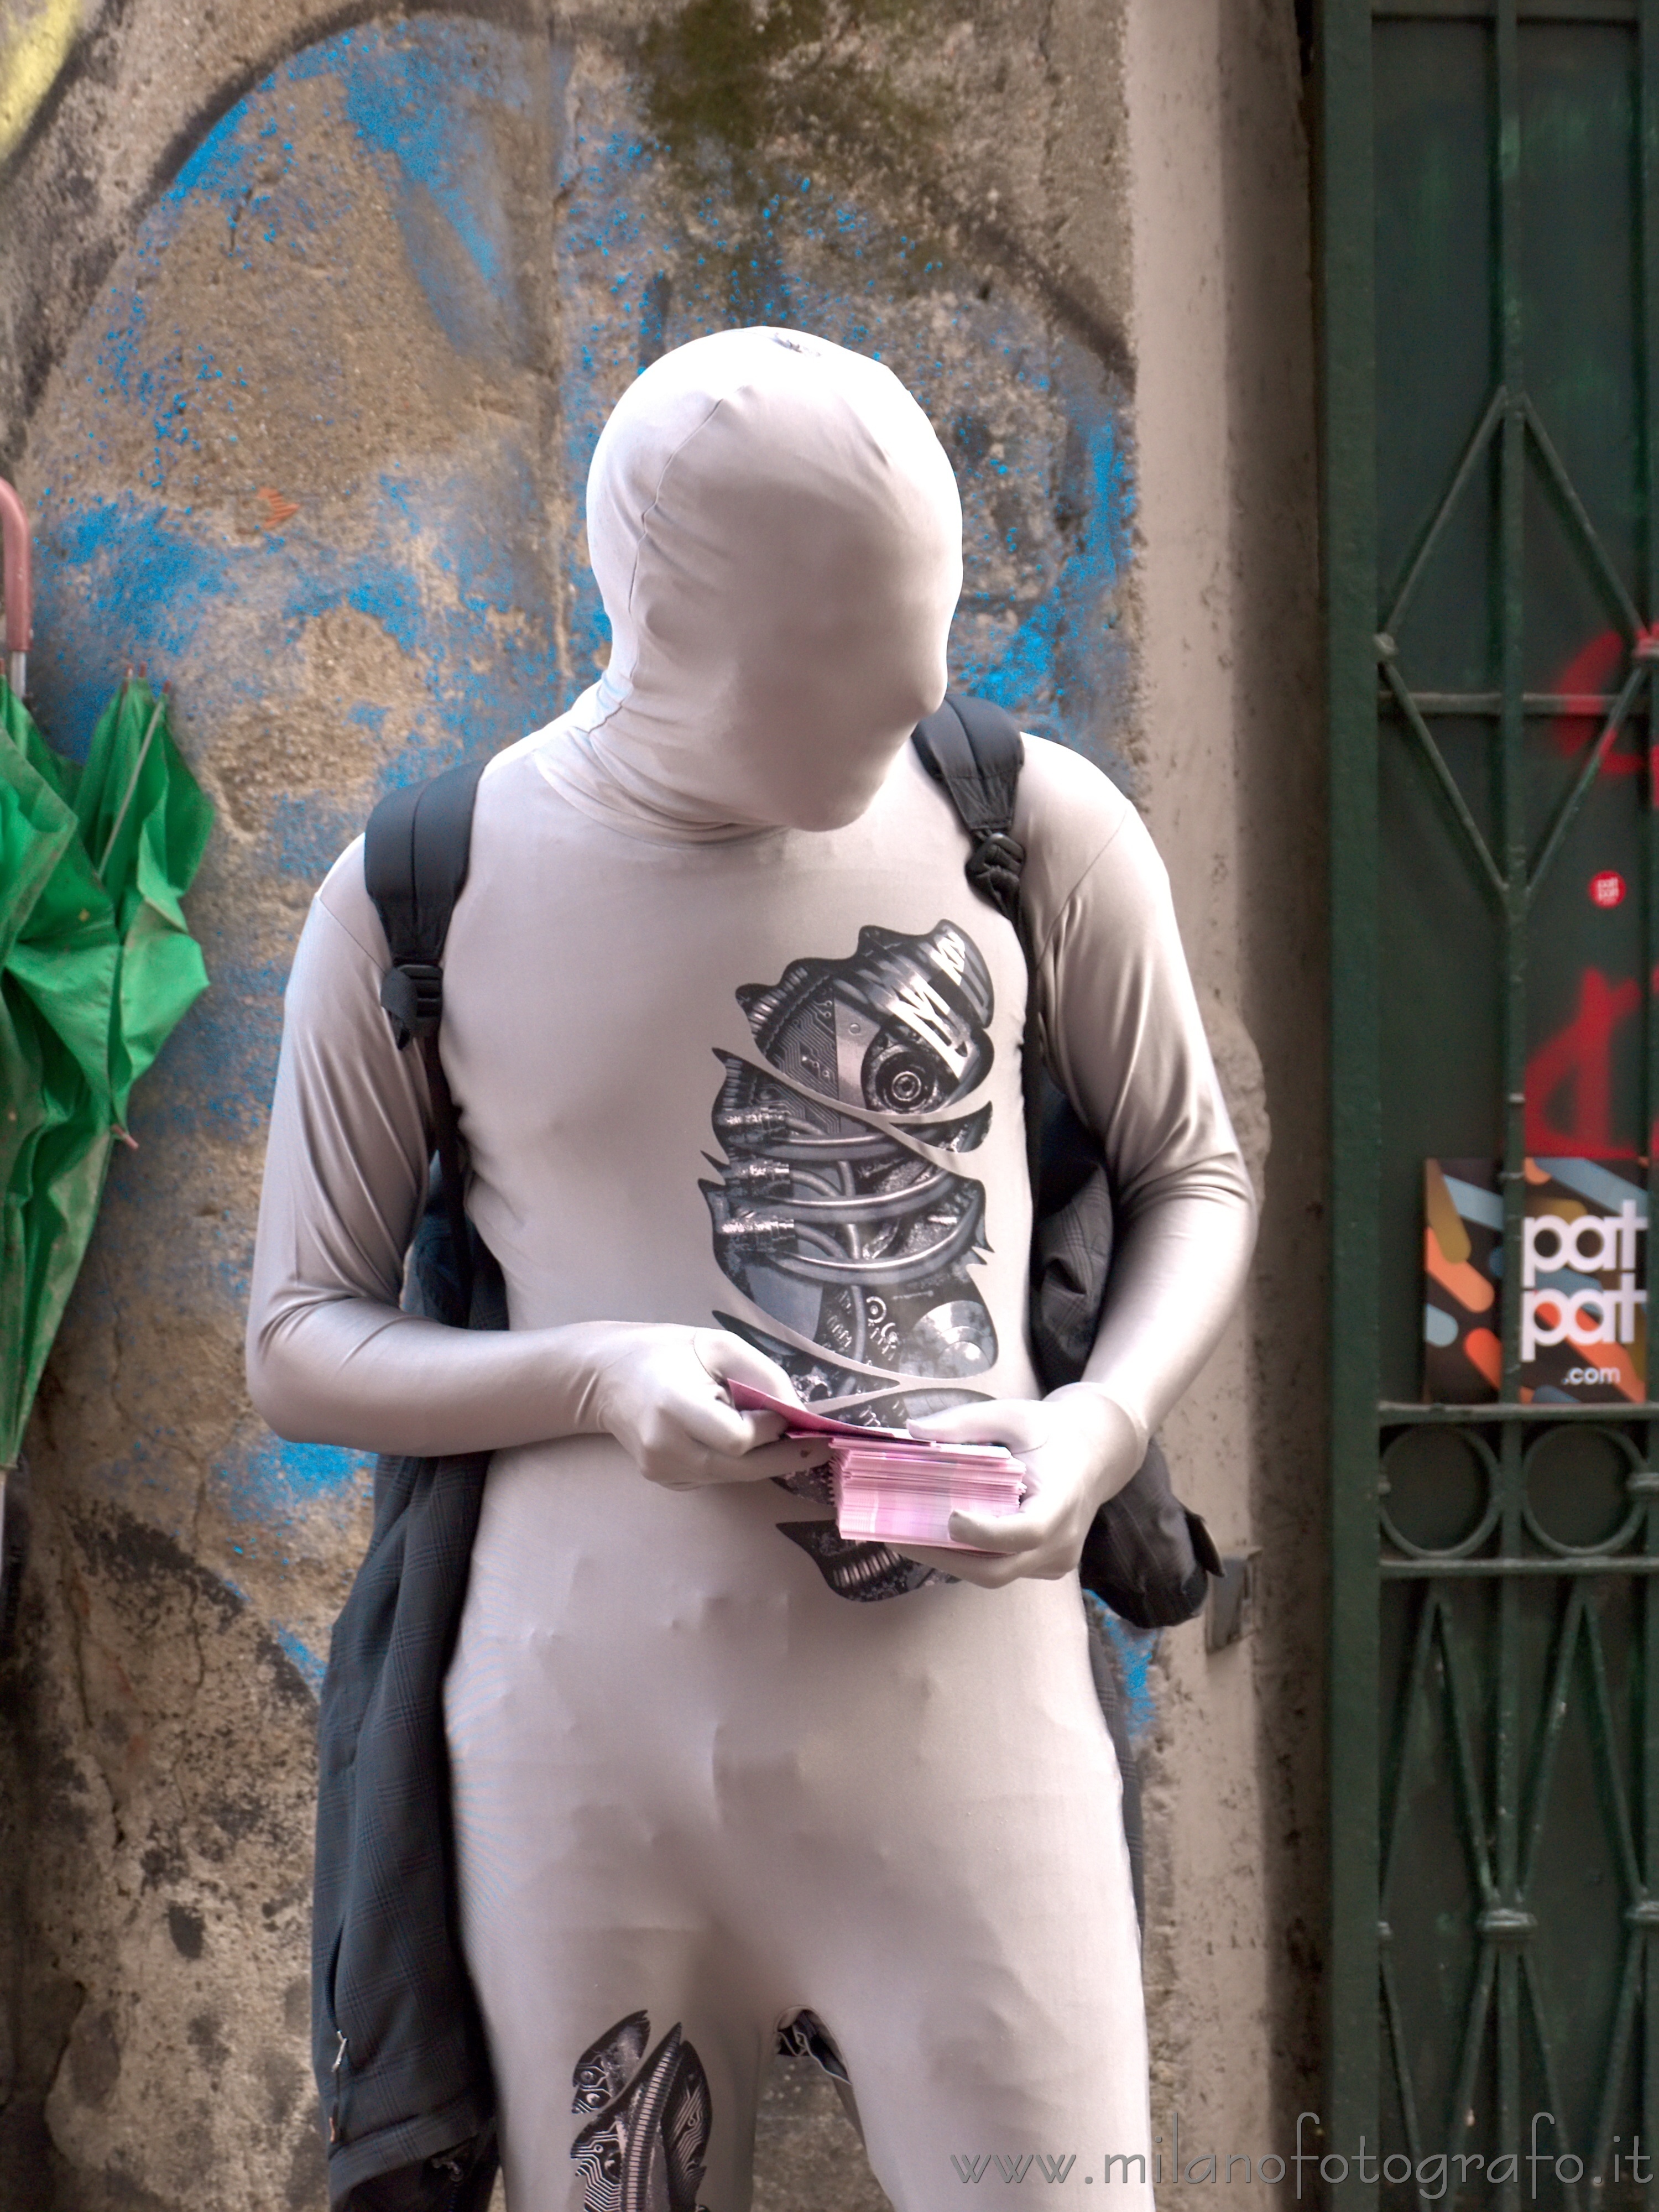 Milan (Italy): Advertising man in siver at Fuorisalone 2013 - Milan (Italy)